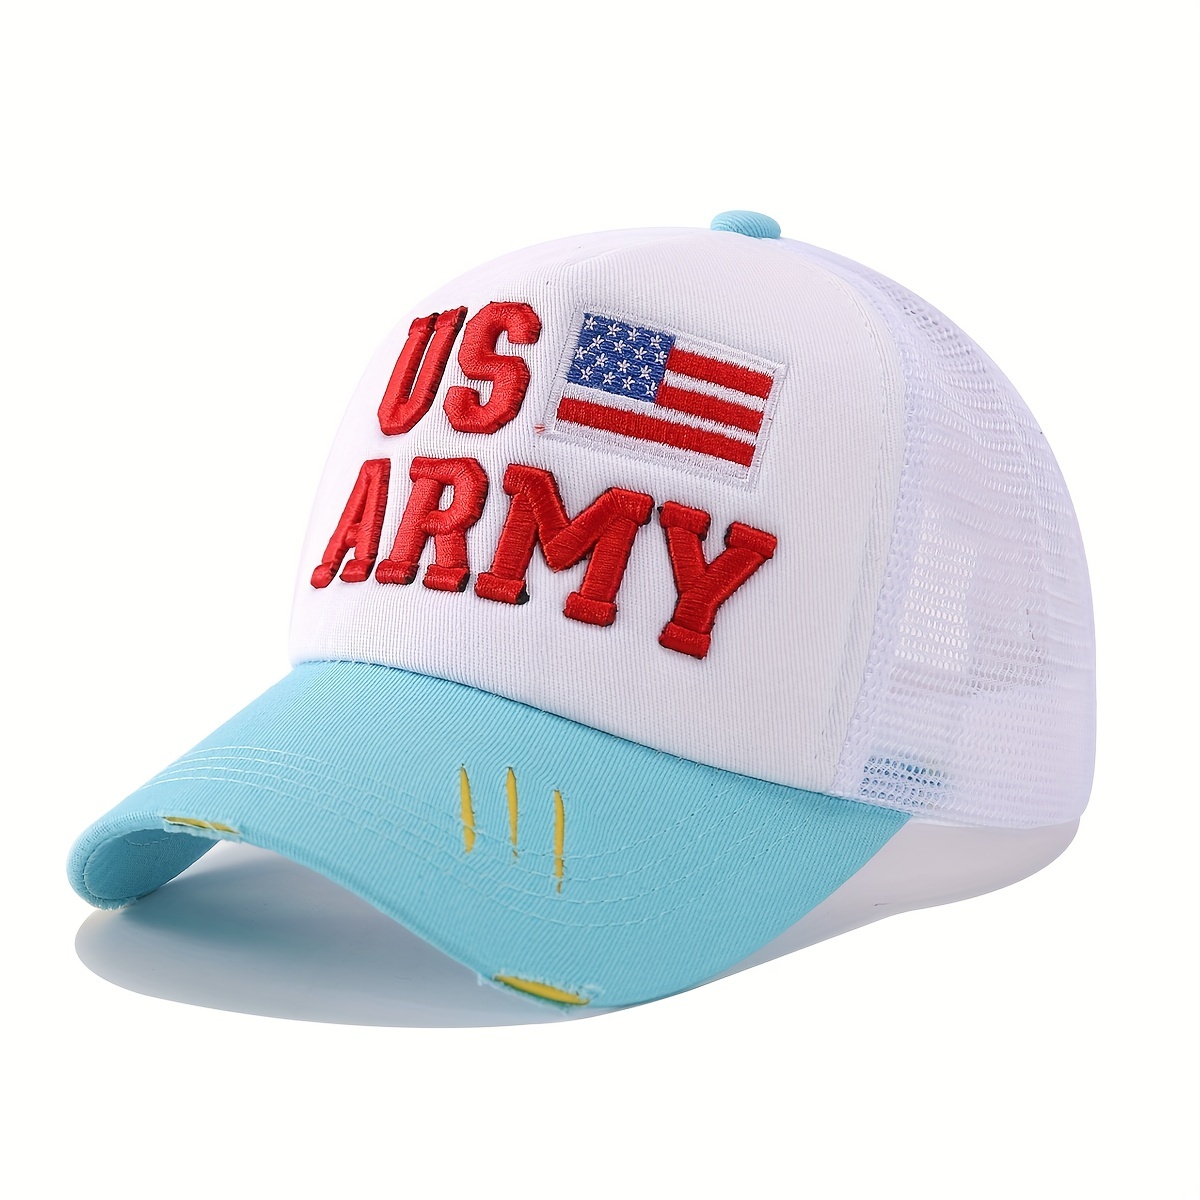 Military cap, army baseball cap, Varan camouflage, sand color